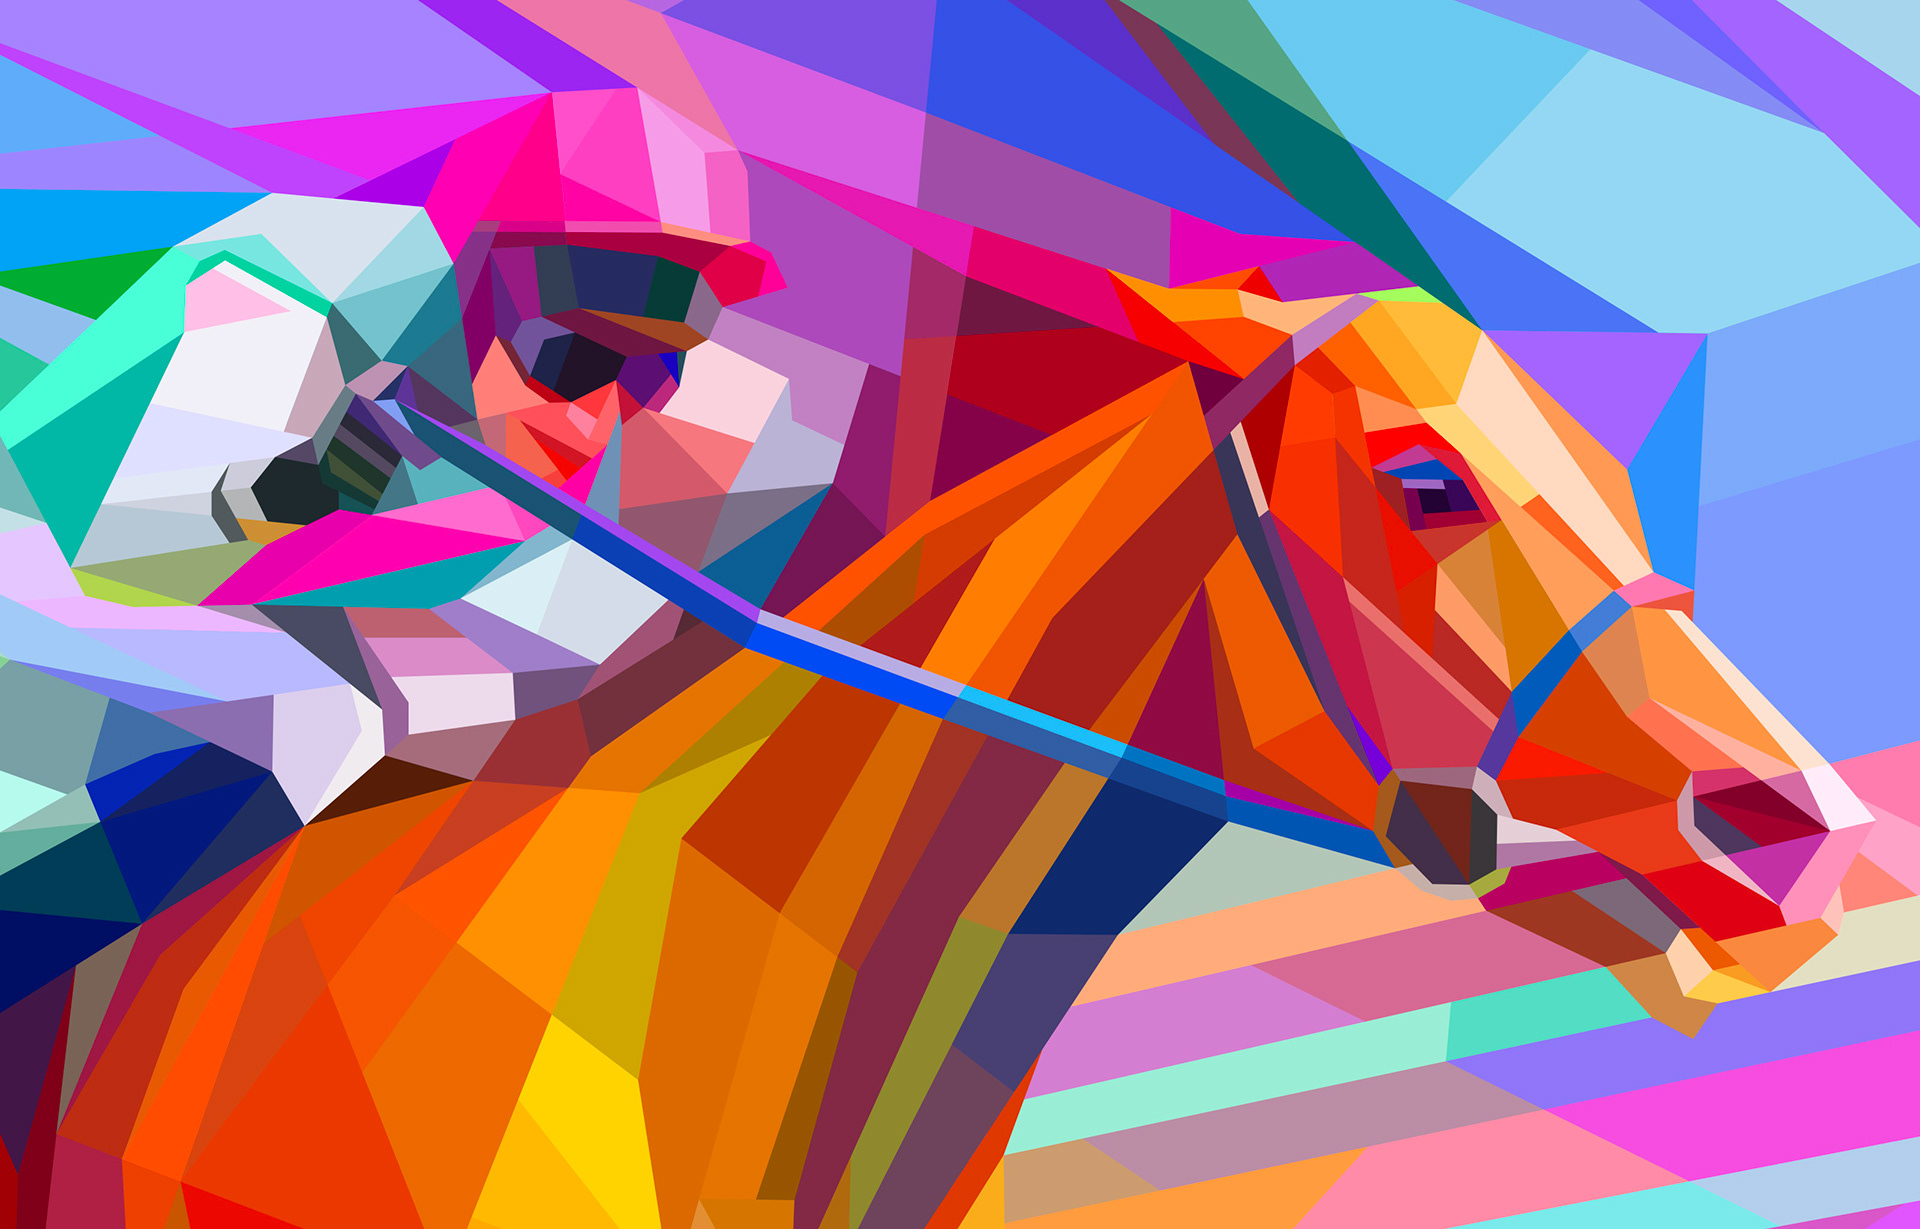 Charis Tsevis - Ascot racehorse: You bring the colour.